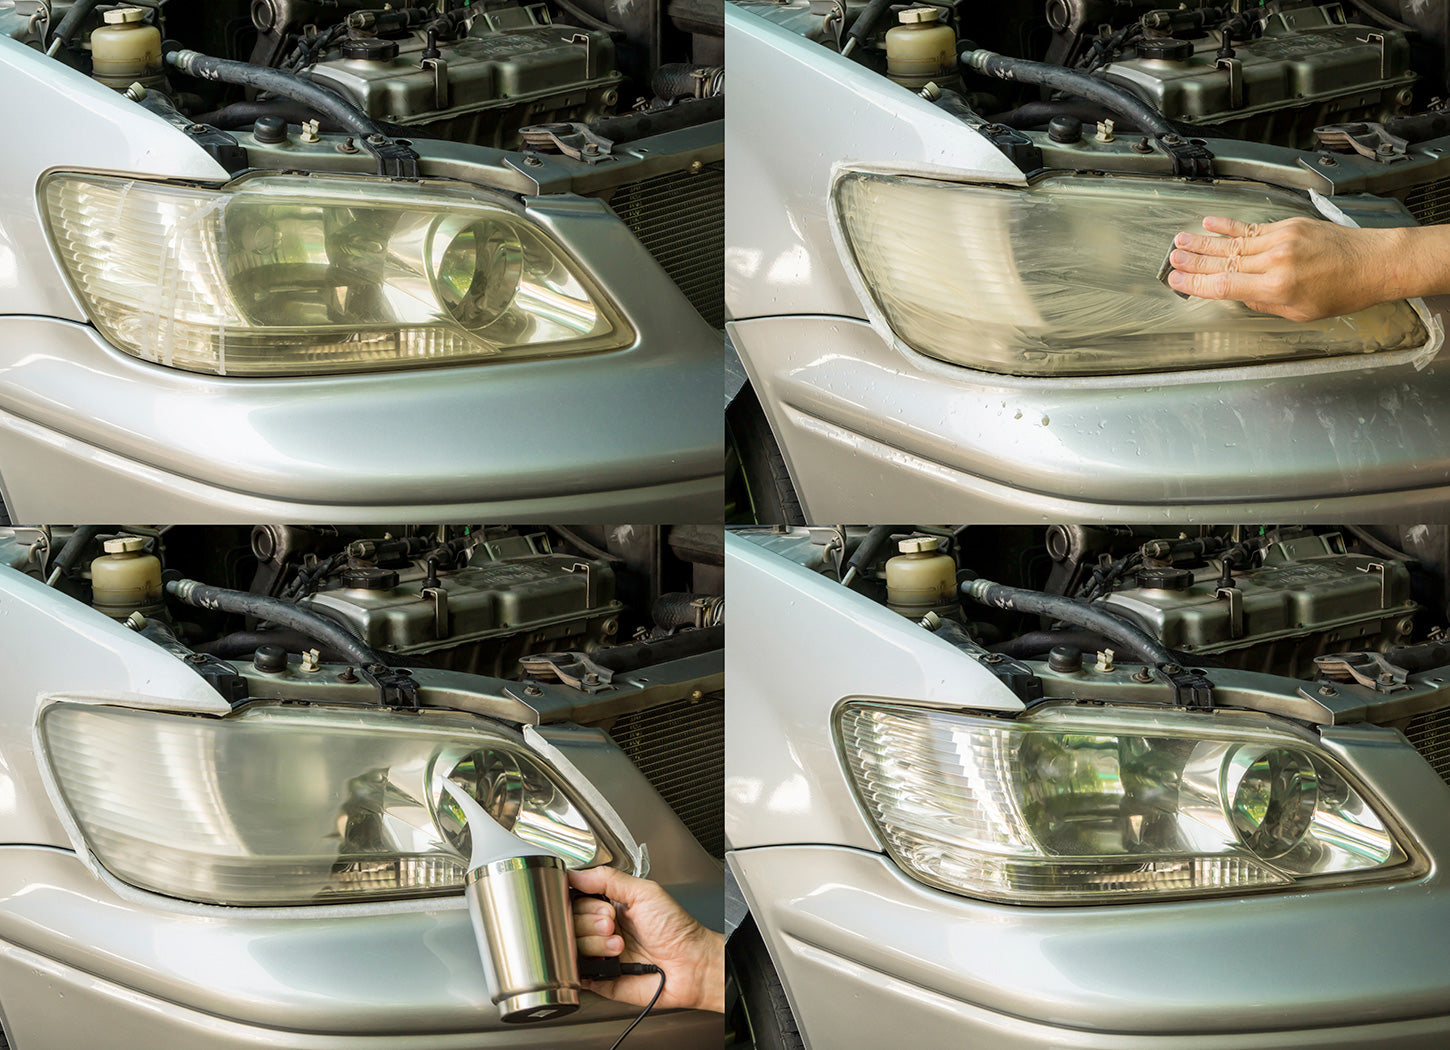 How Long Does Car Headlight Restoration Last?